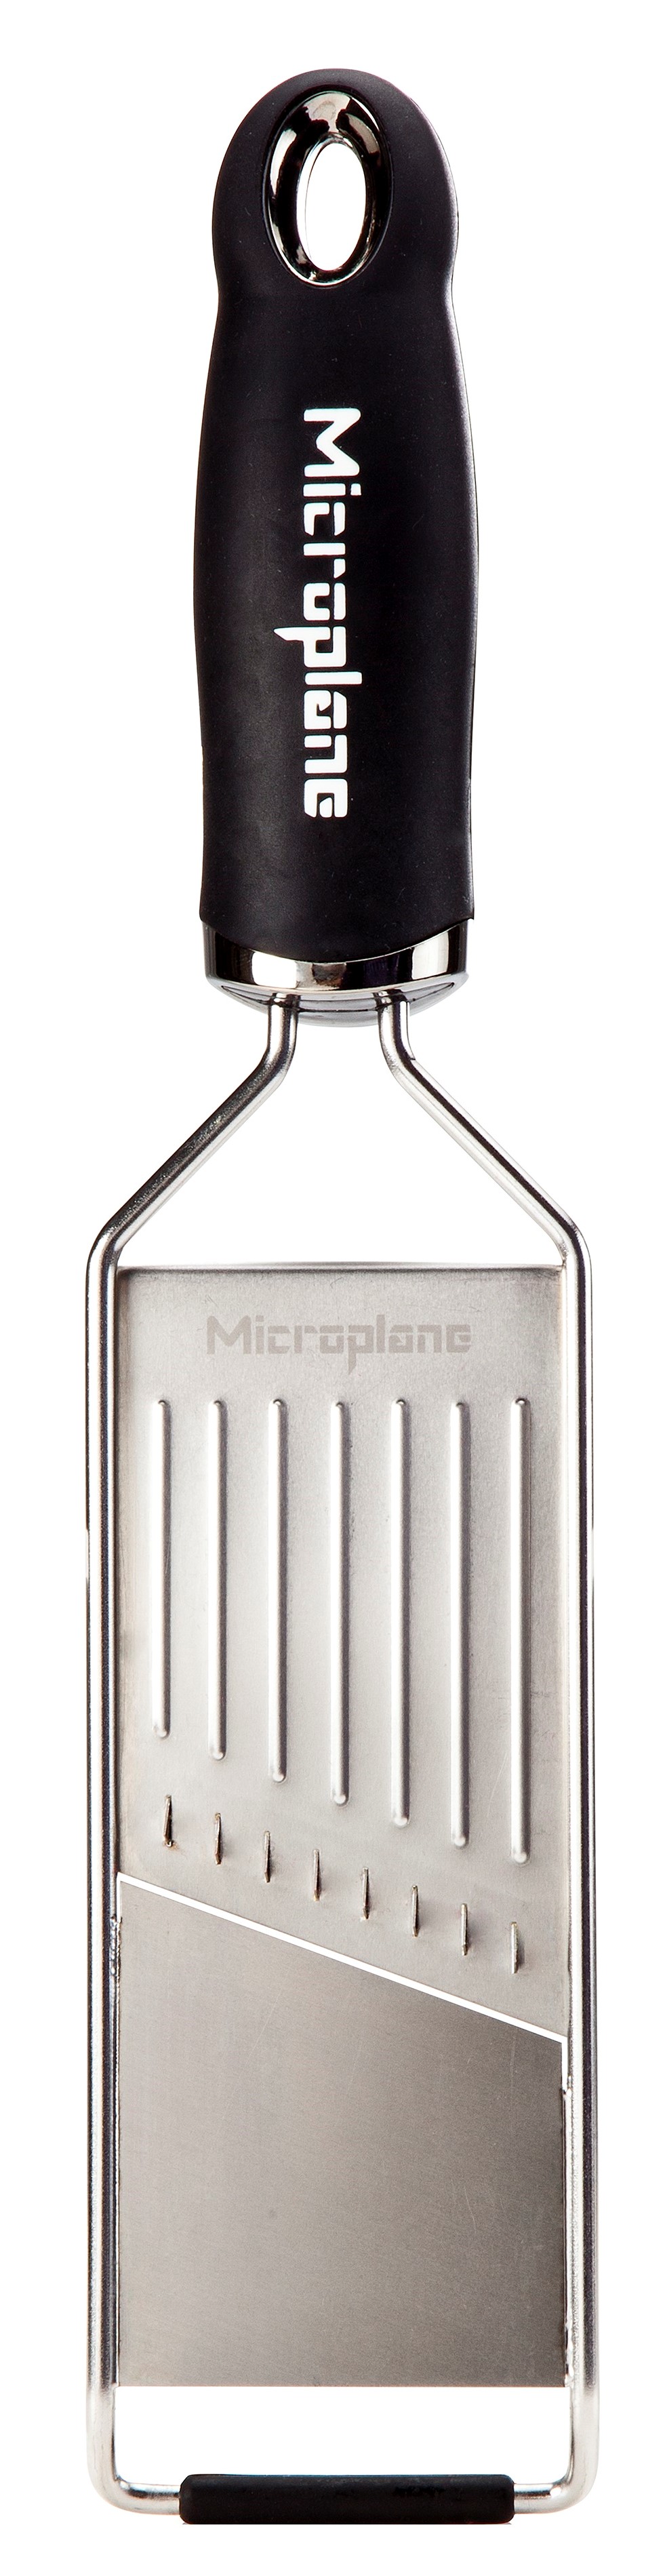 MICROPLANE - Gourmet Julienne Slicer  